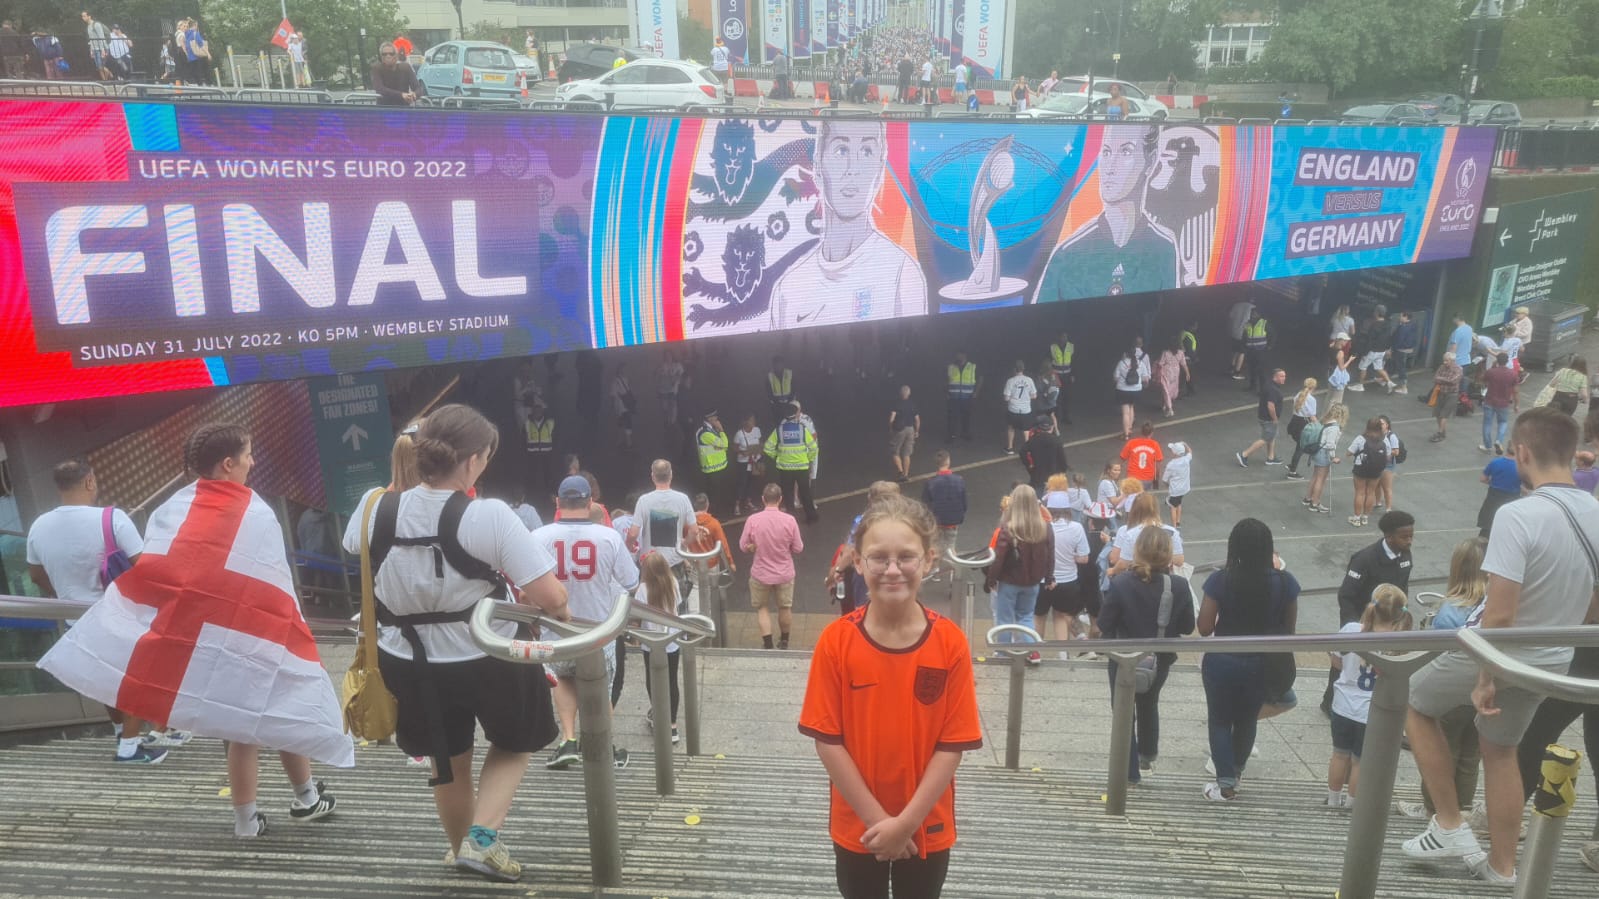 Evie Jackson, 8, outside Wembley